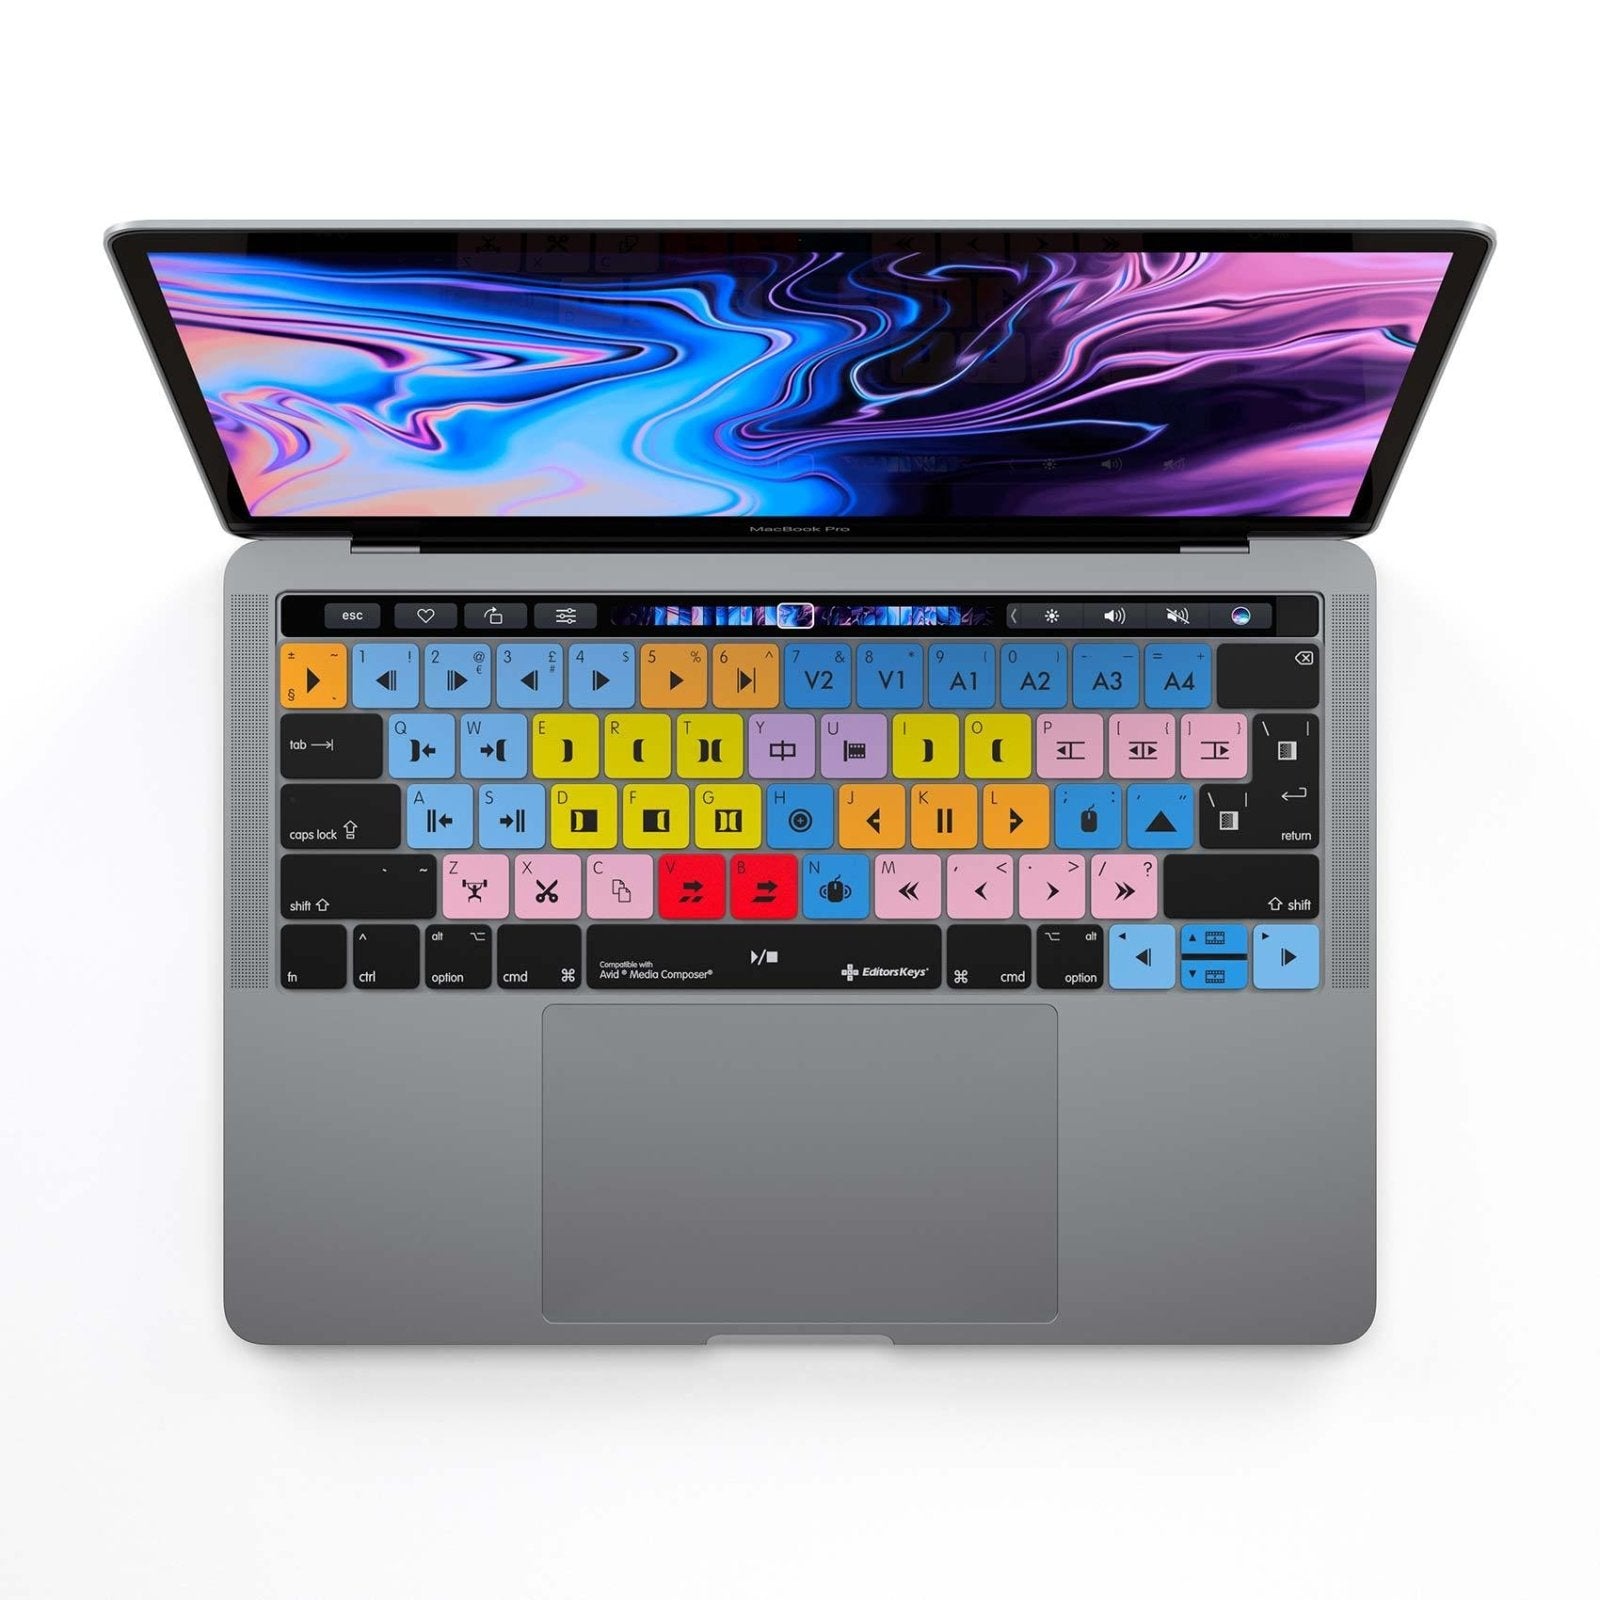 Avid Media Composer Keyboard Covers for MacBook and iMac - Editors Keys